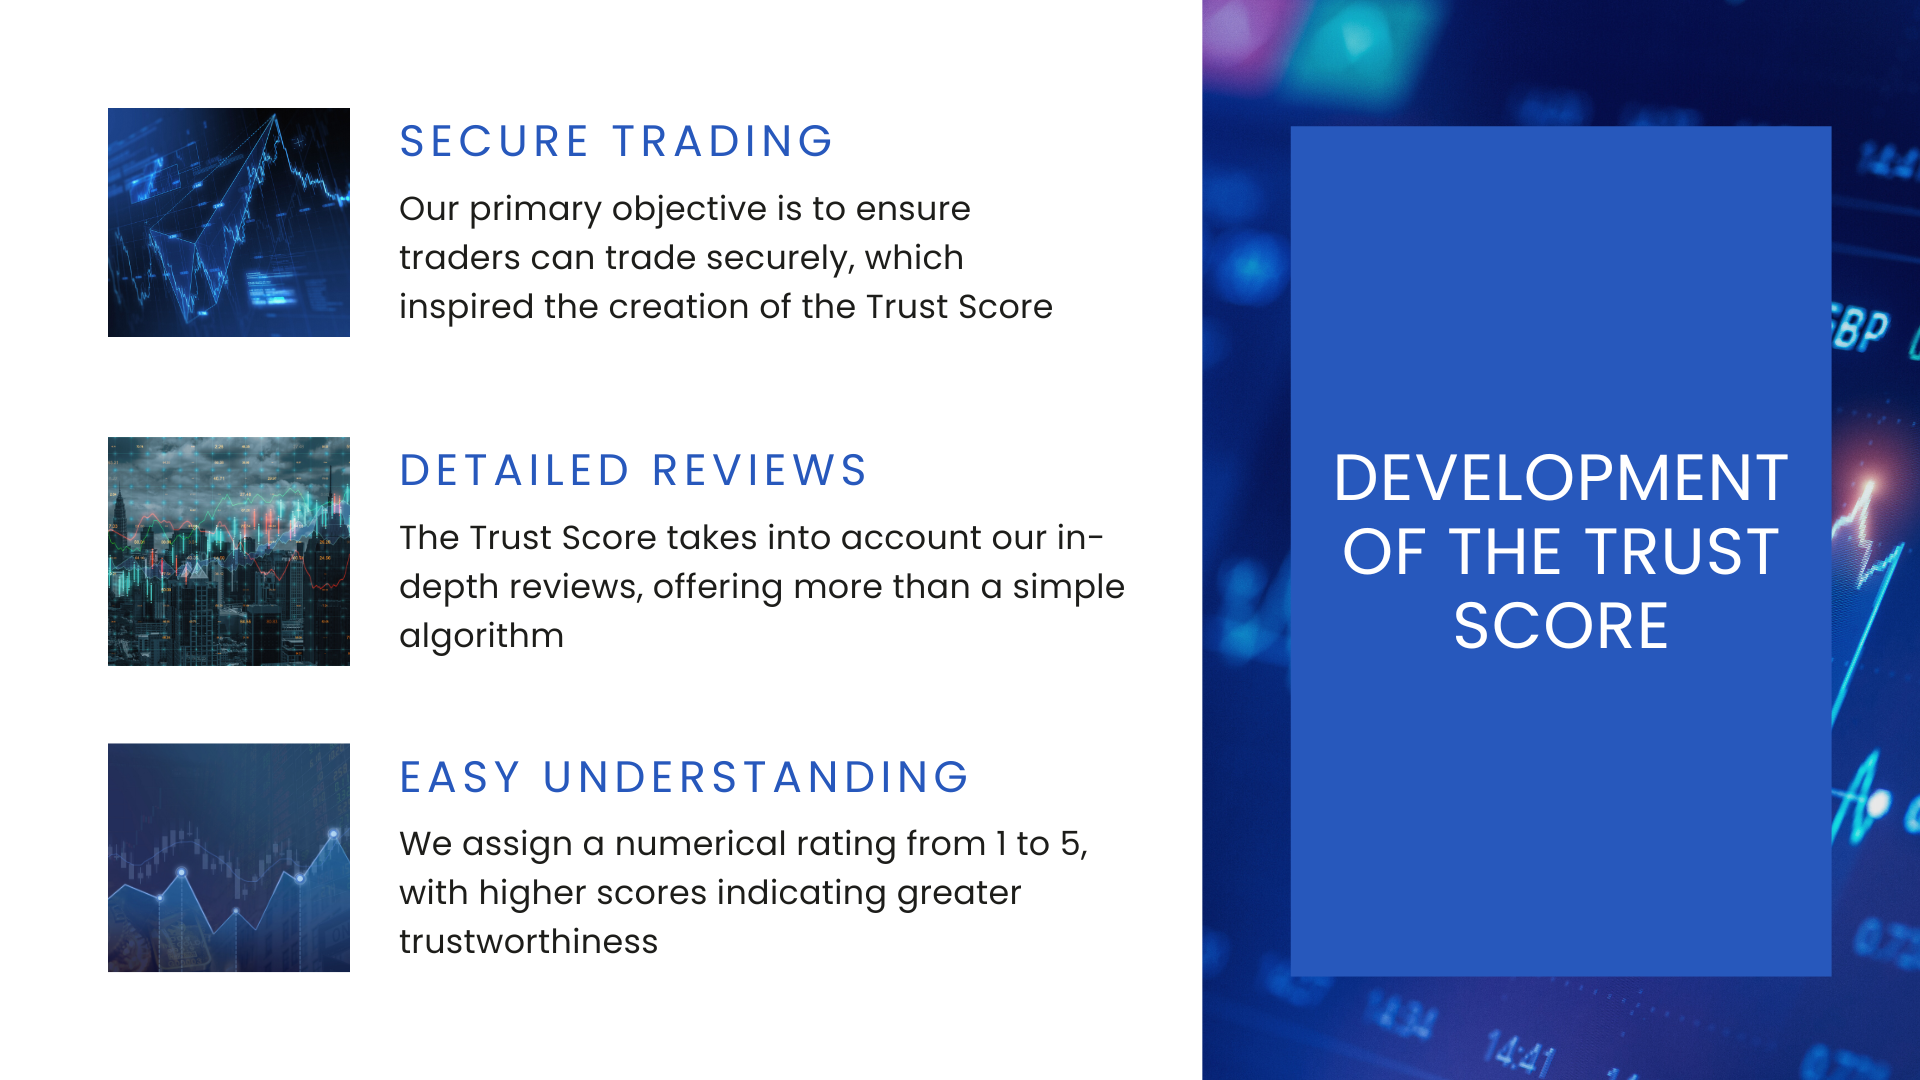 Development of the Trust Score